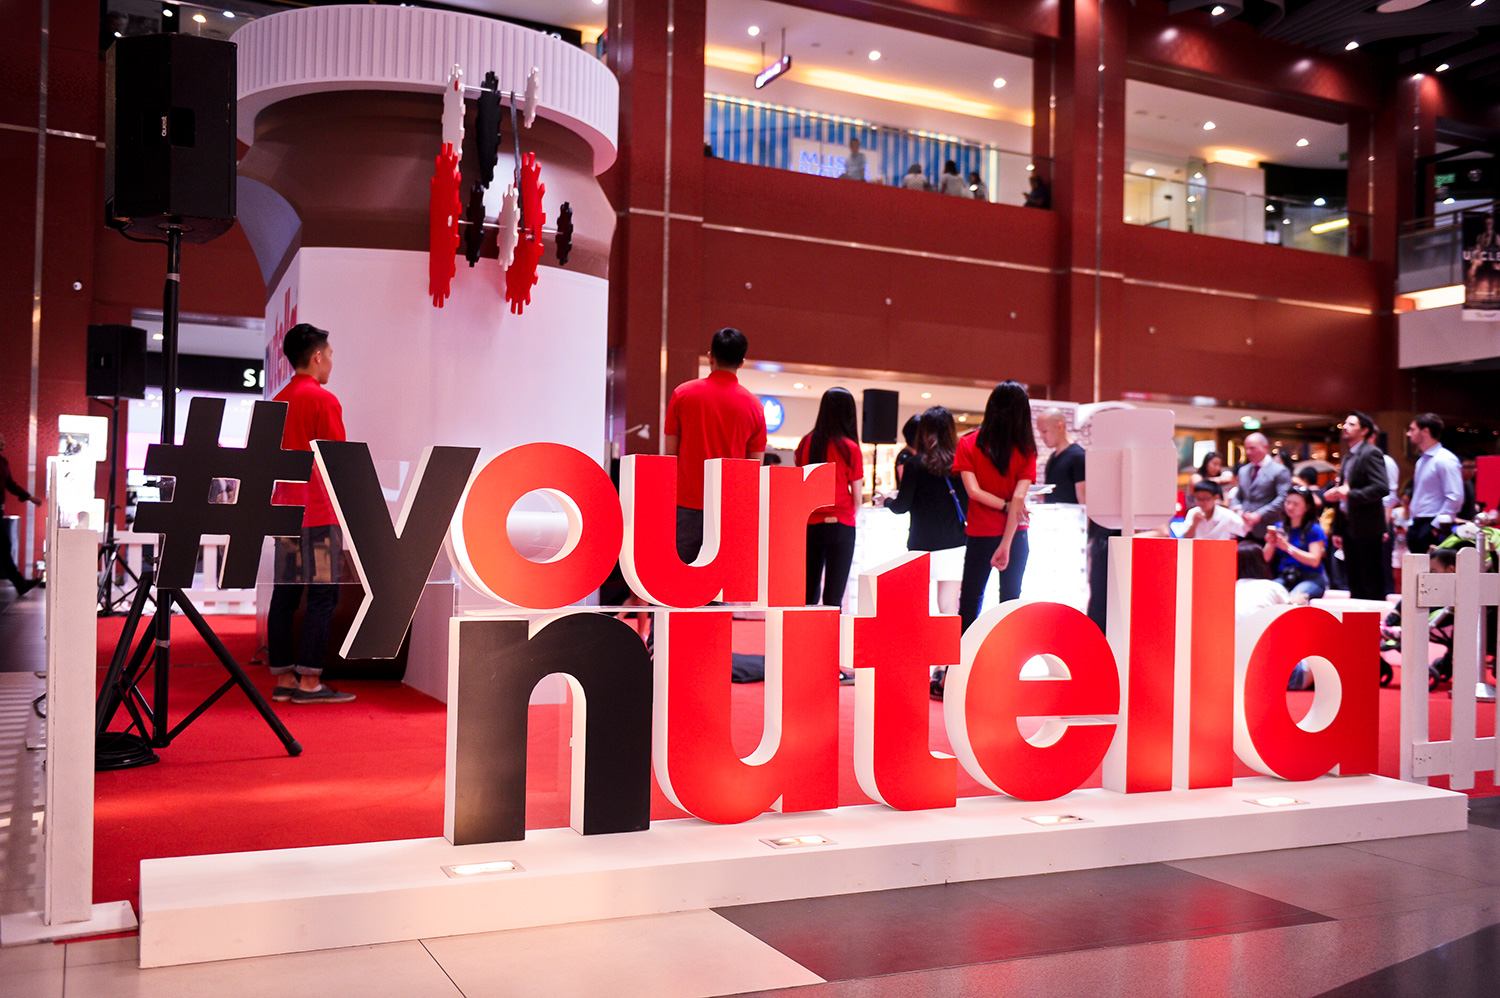 #yournutella-signage